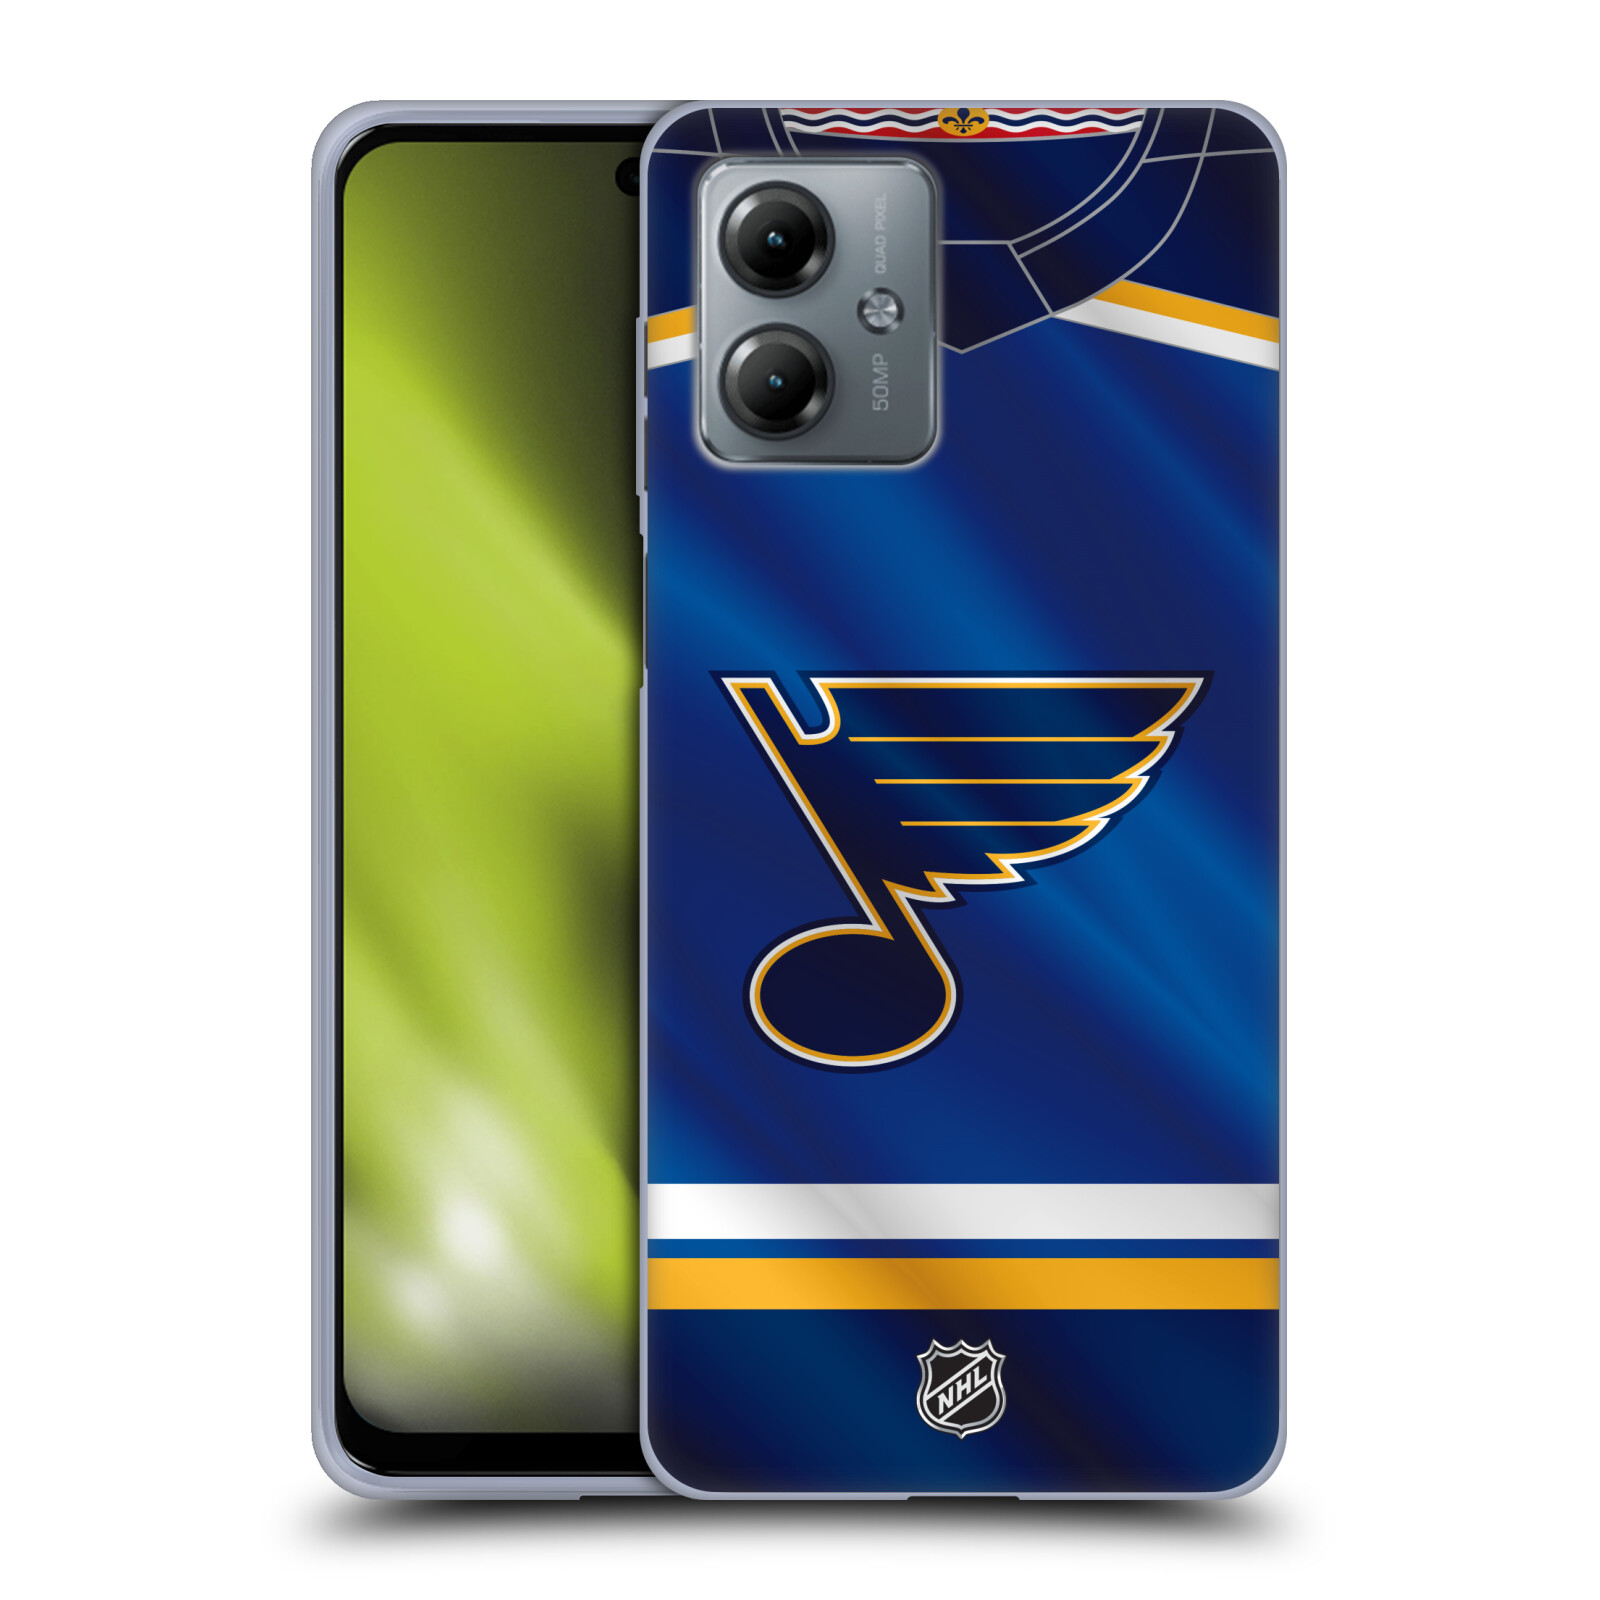 Silikonové pouzdro na mobil Motorola Moto G14 - NHL - Dres St Louis Blues (Silikonový kryt, obal, pouzdro na mobilní telefon Motorola Moto G14 s licencovaným motivem NHL - Dres St Louis Blues)